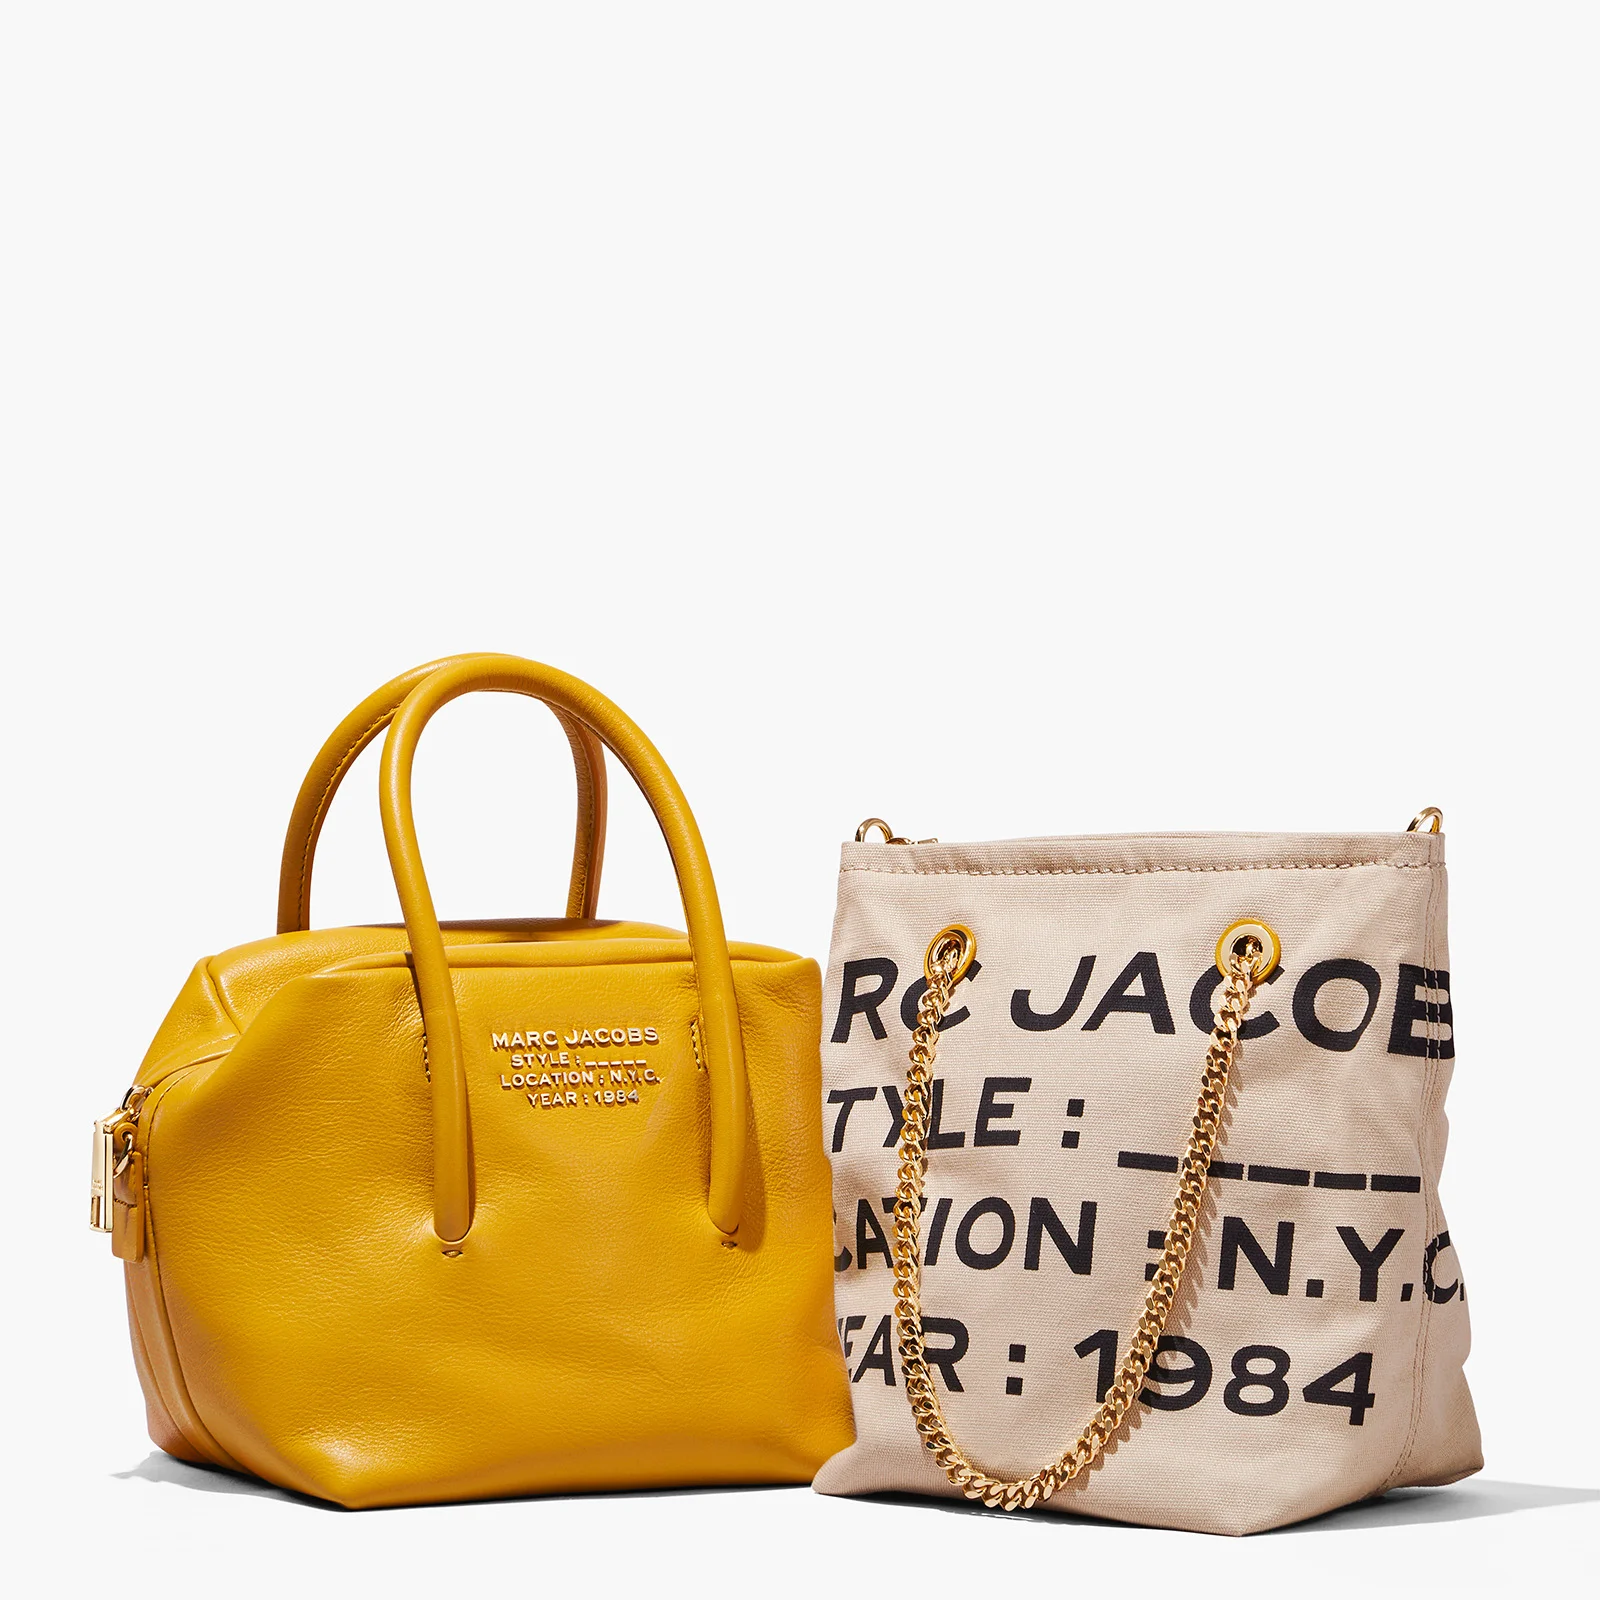 Marc Jacobs Women's Duet Mini Satchel Bag - Tawny Olive Image 1